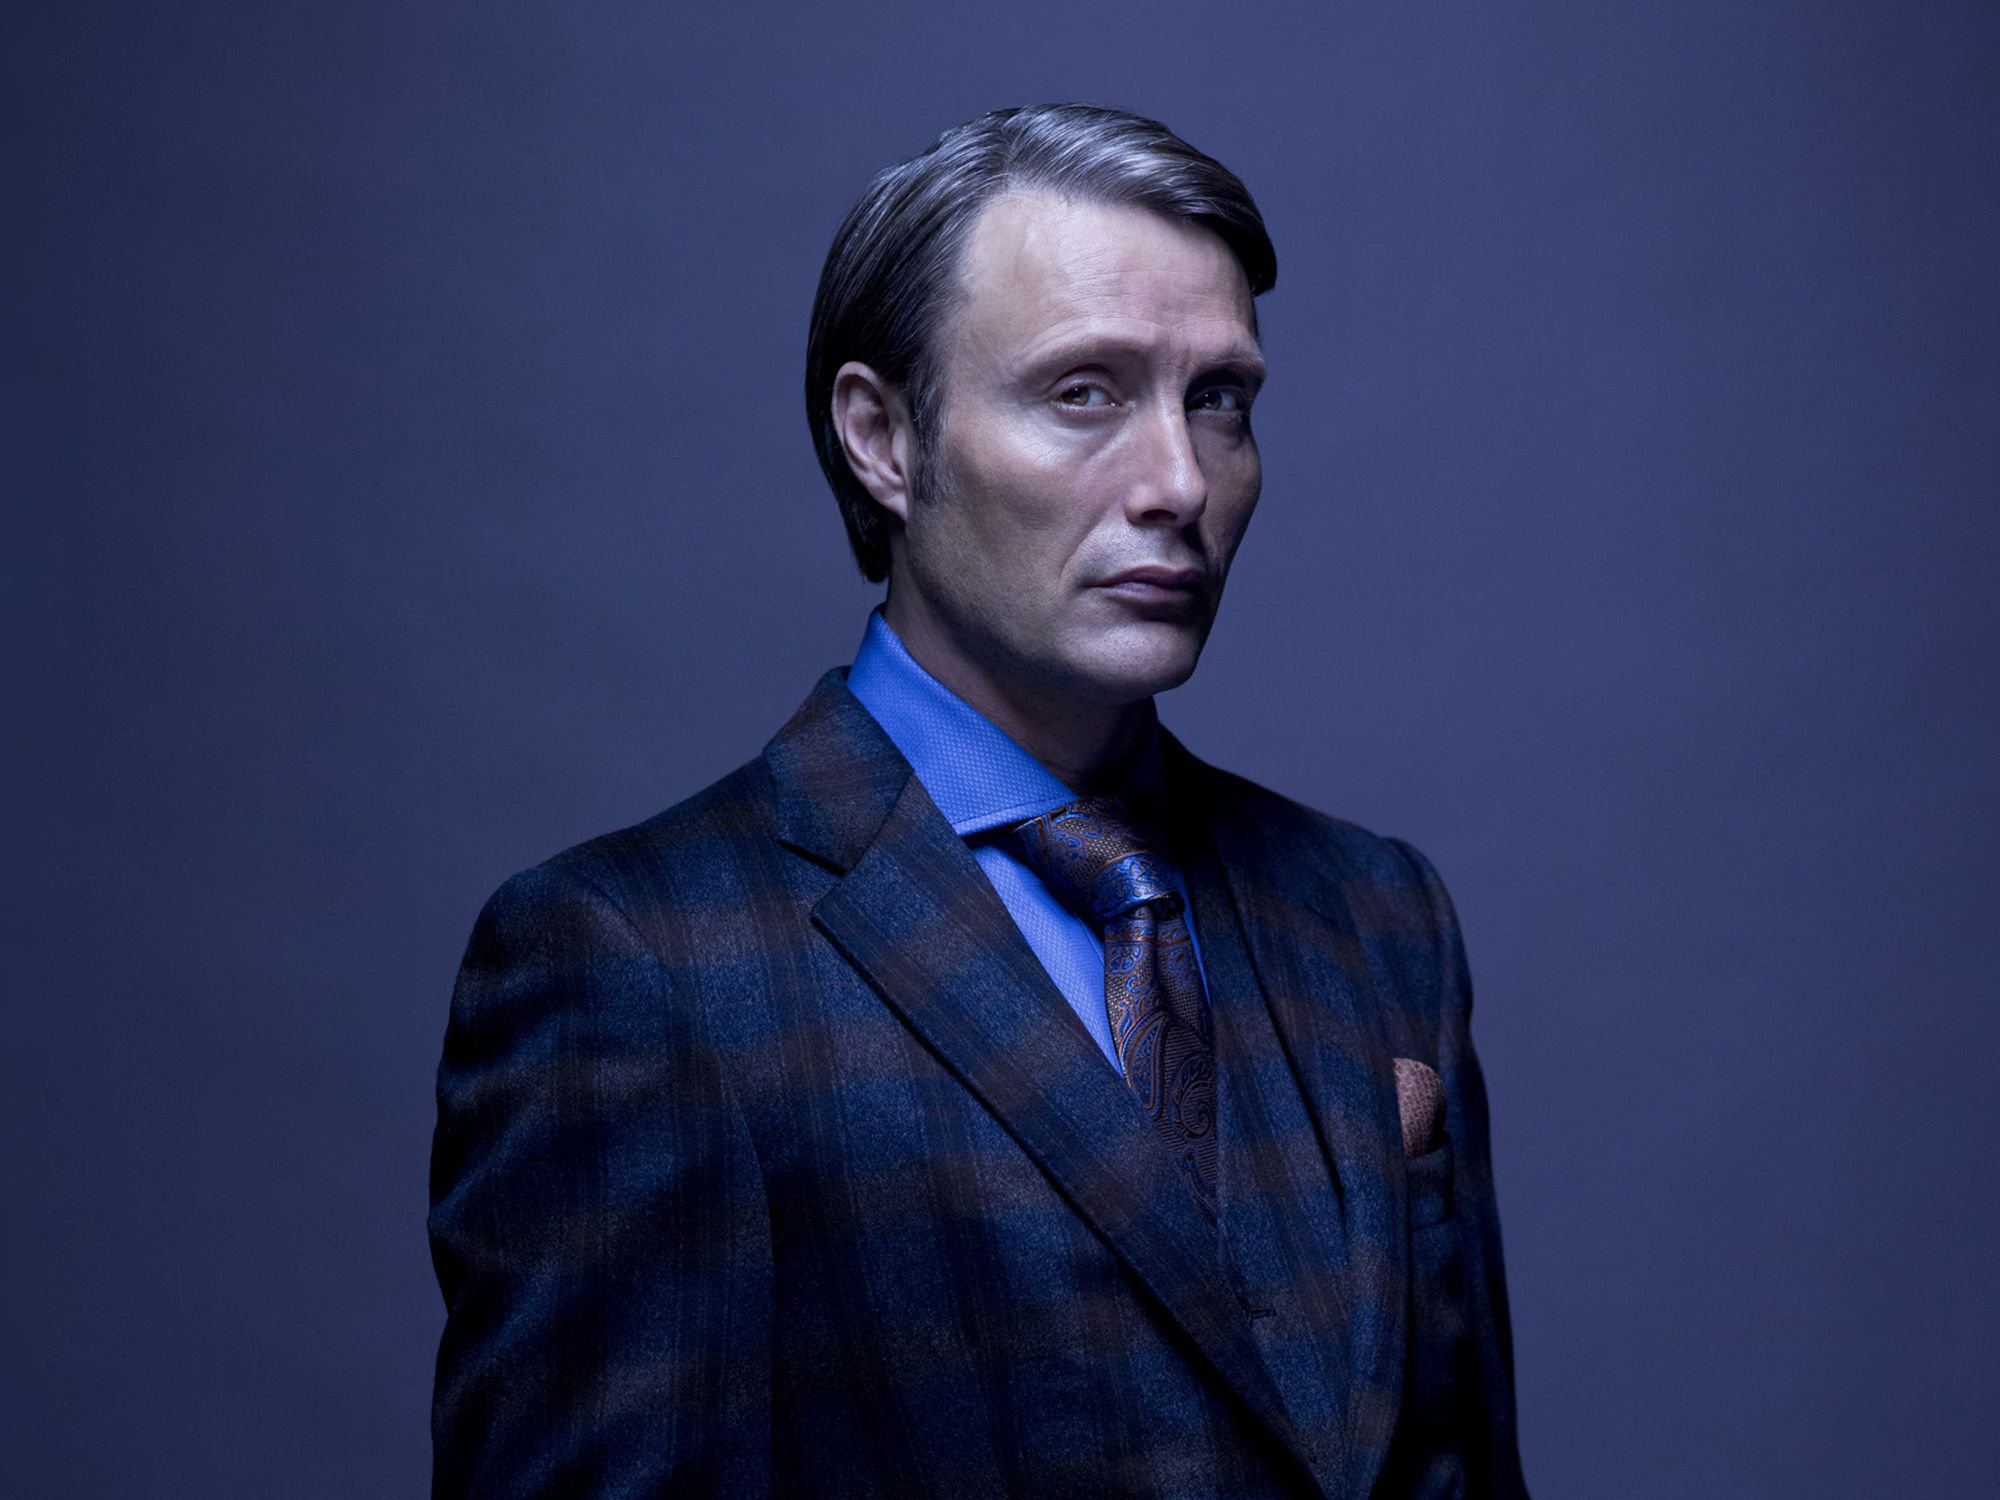 Mads Mikkelsen as Hannibal Lecter in Hannibal (2013-2015).